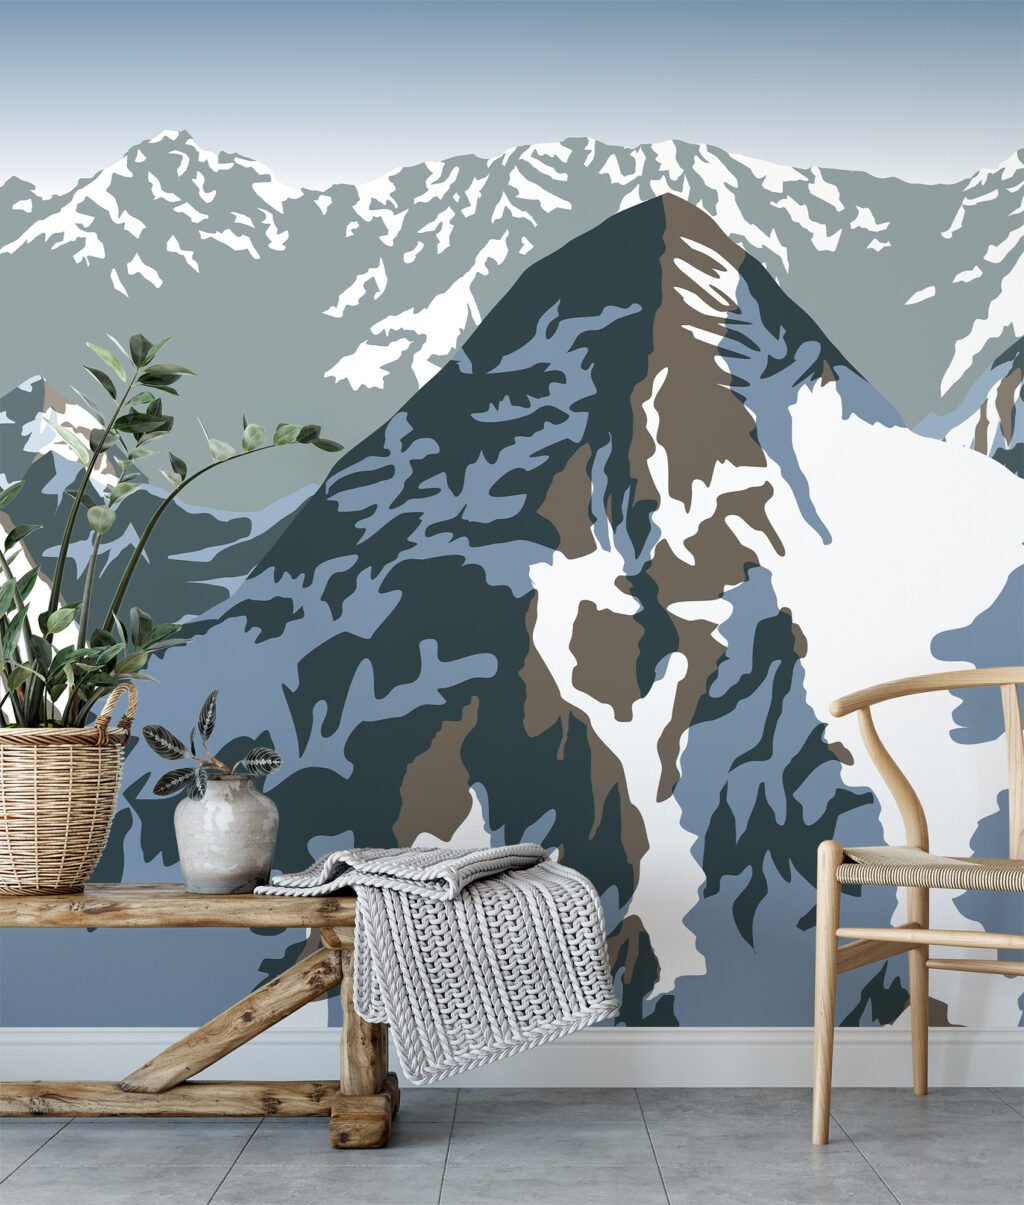 Flat Art Snowy Mountains Illustration Wallpaper, Abstract Landscape Peel & Stick Wall Mural